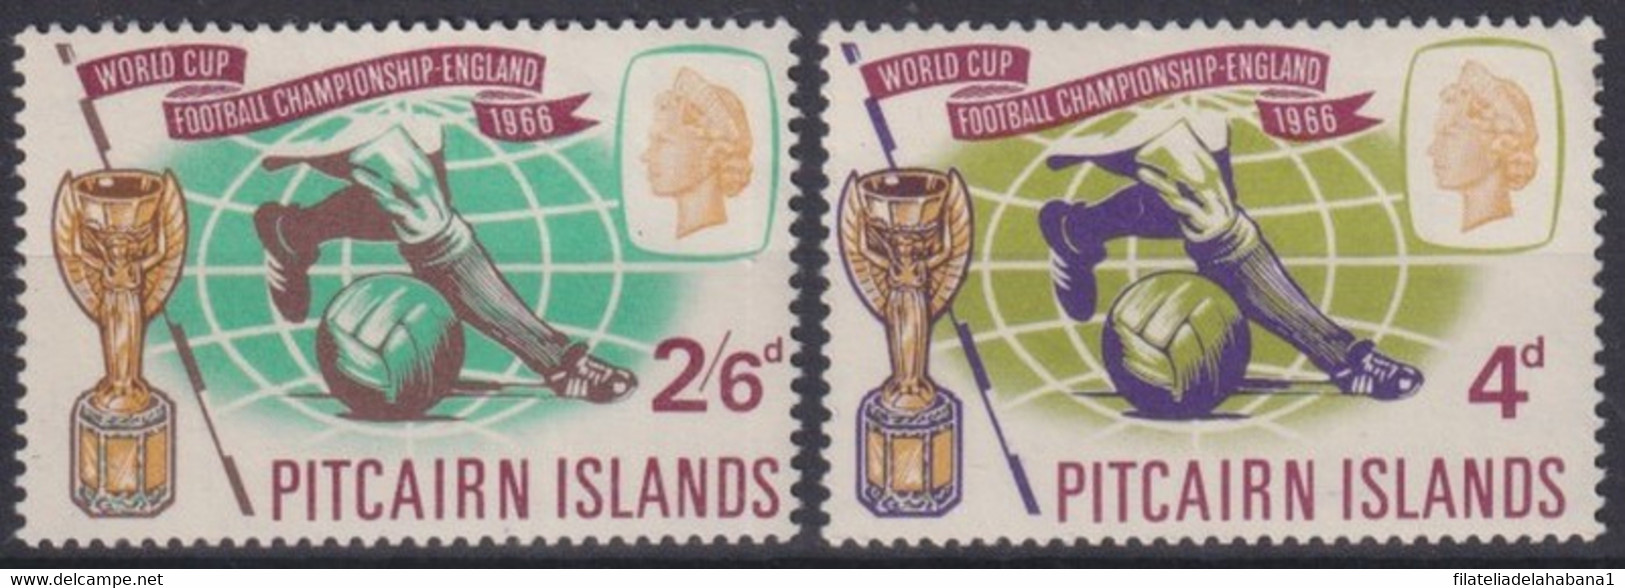 F-EX36472 PITCAIRN 1966 MNH WORLD CHAMPIONSHIP SOCCER CUP FOOTBALL. - 1966 – England